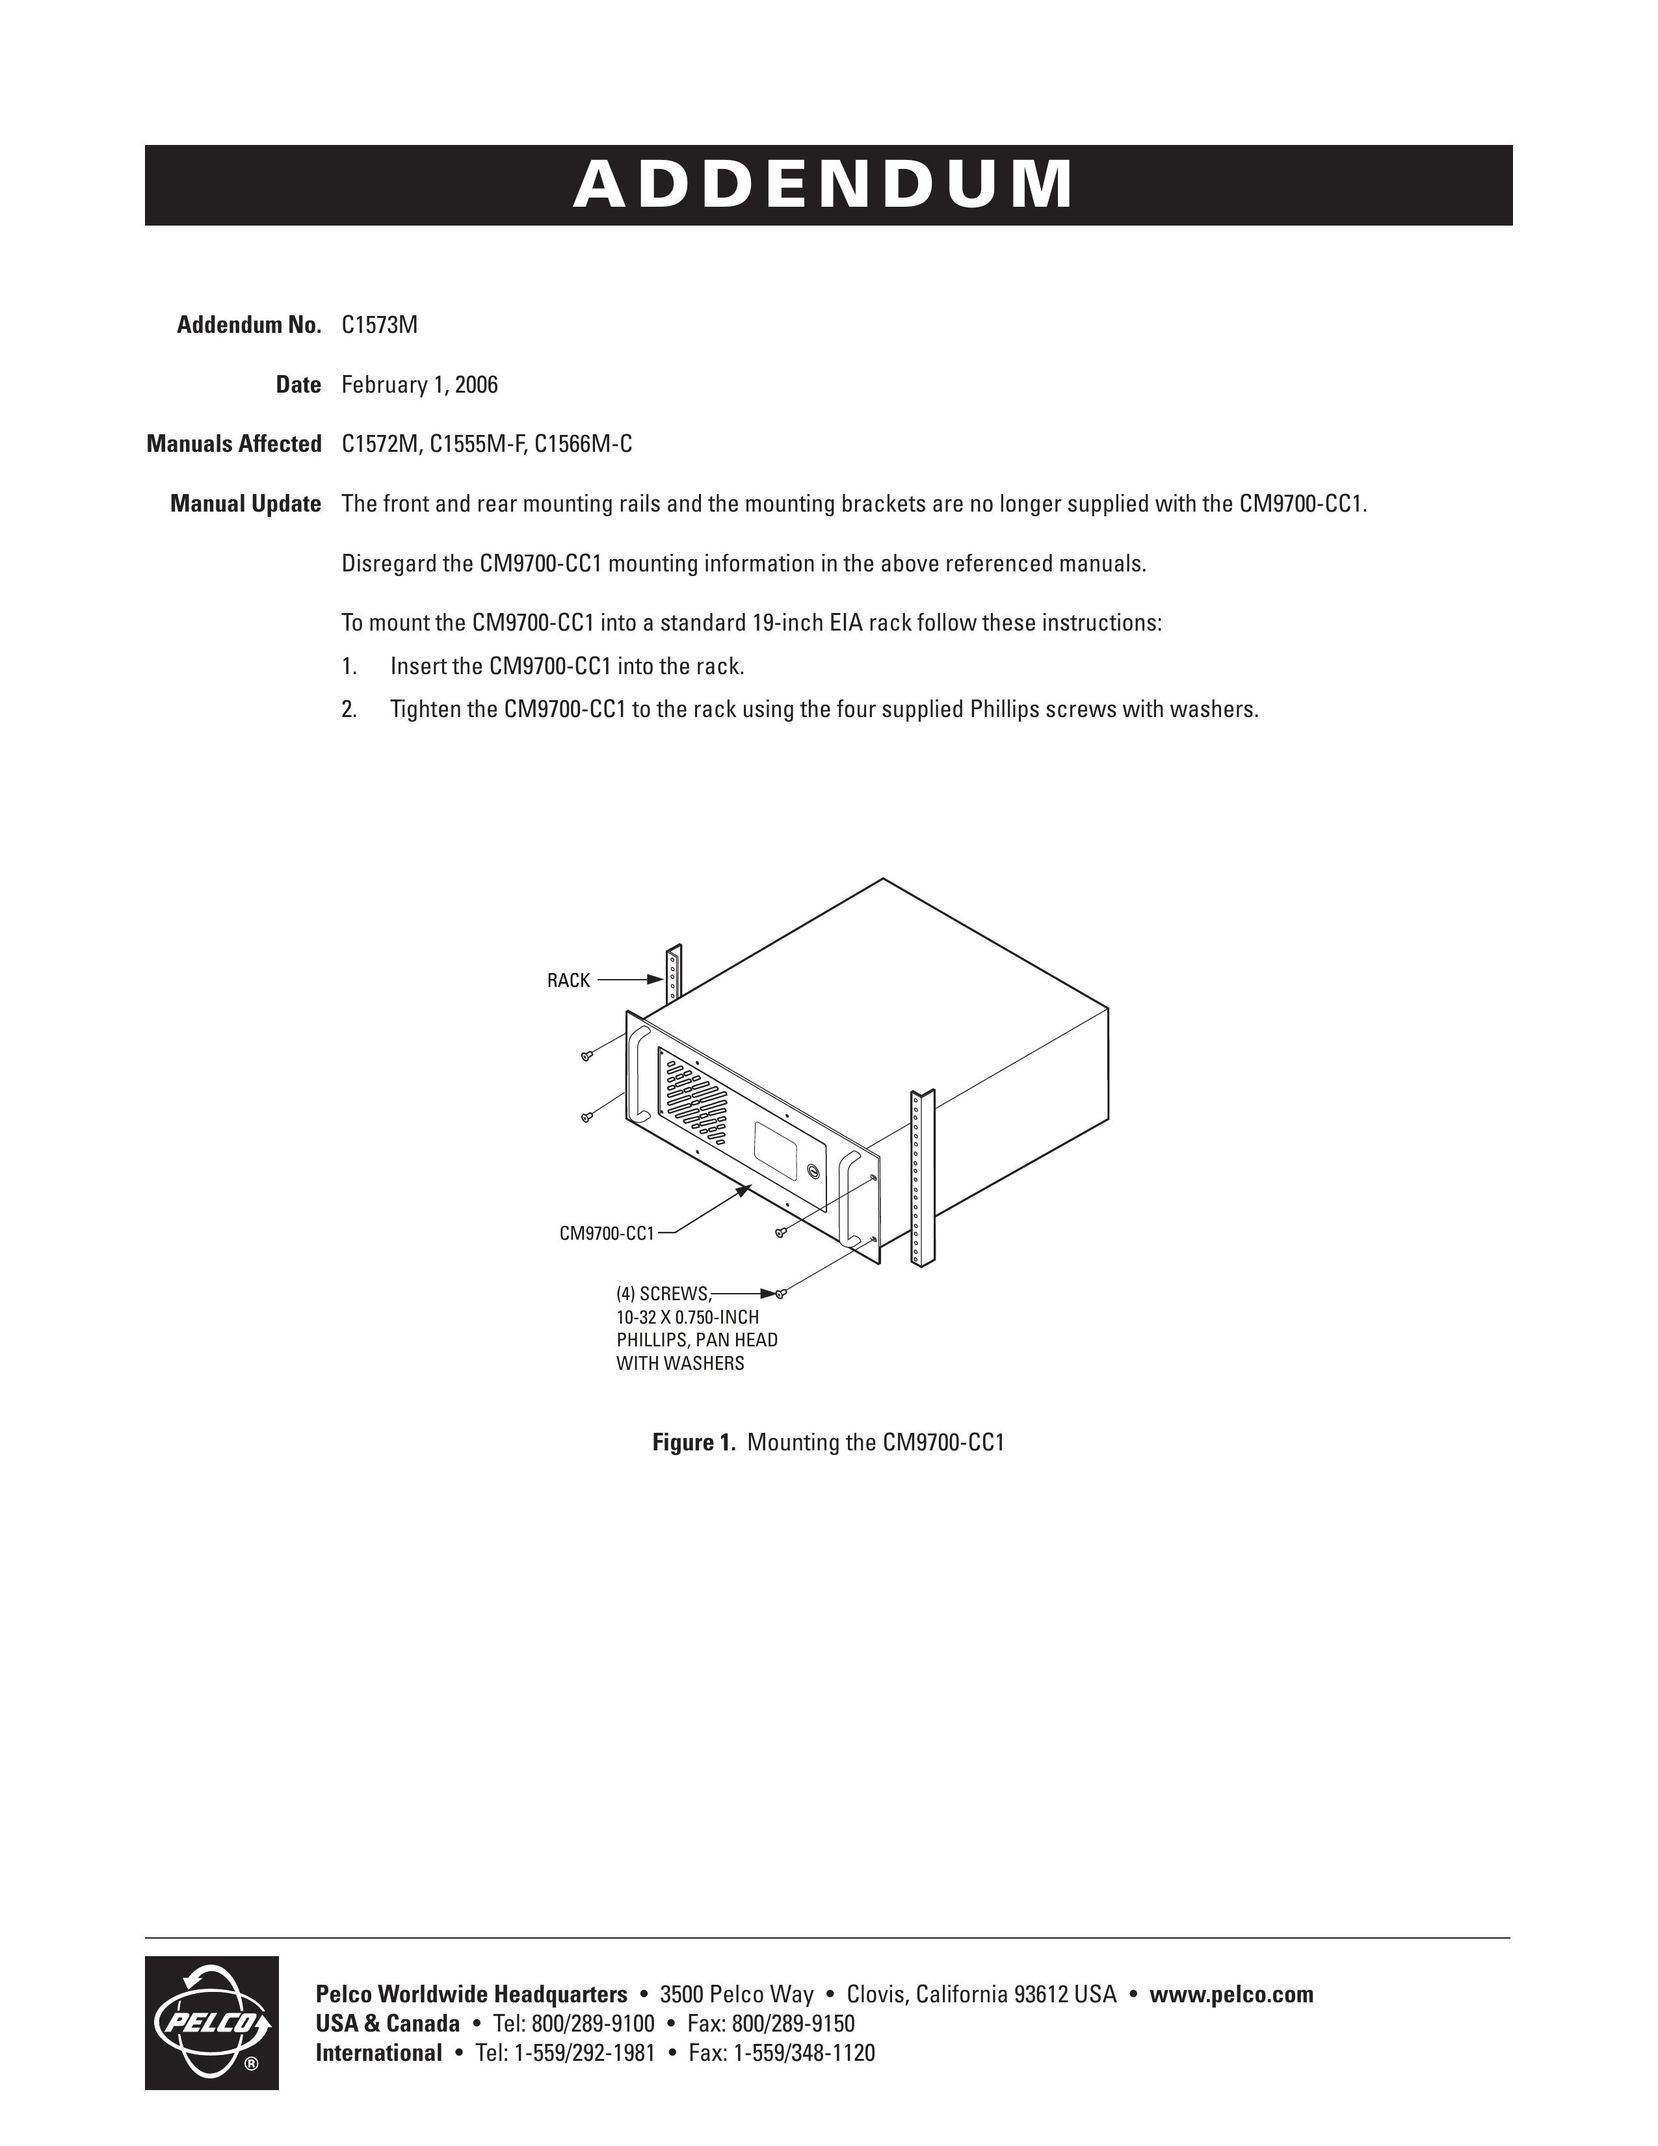 Pelco C1566M-C Switch User Manual